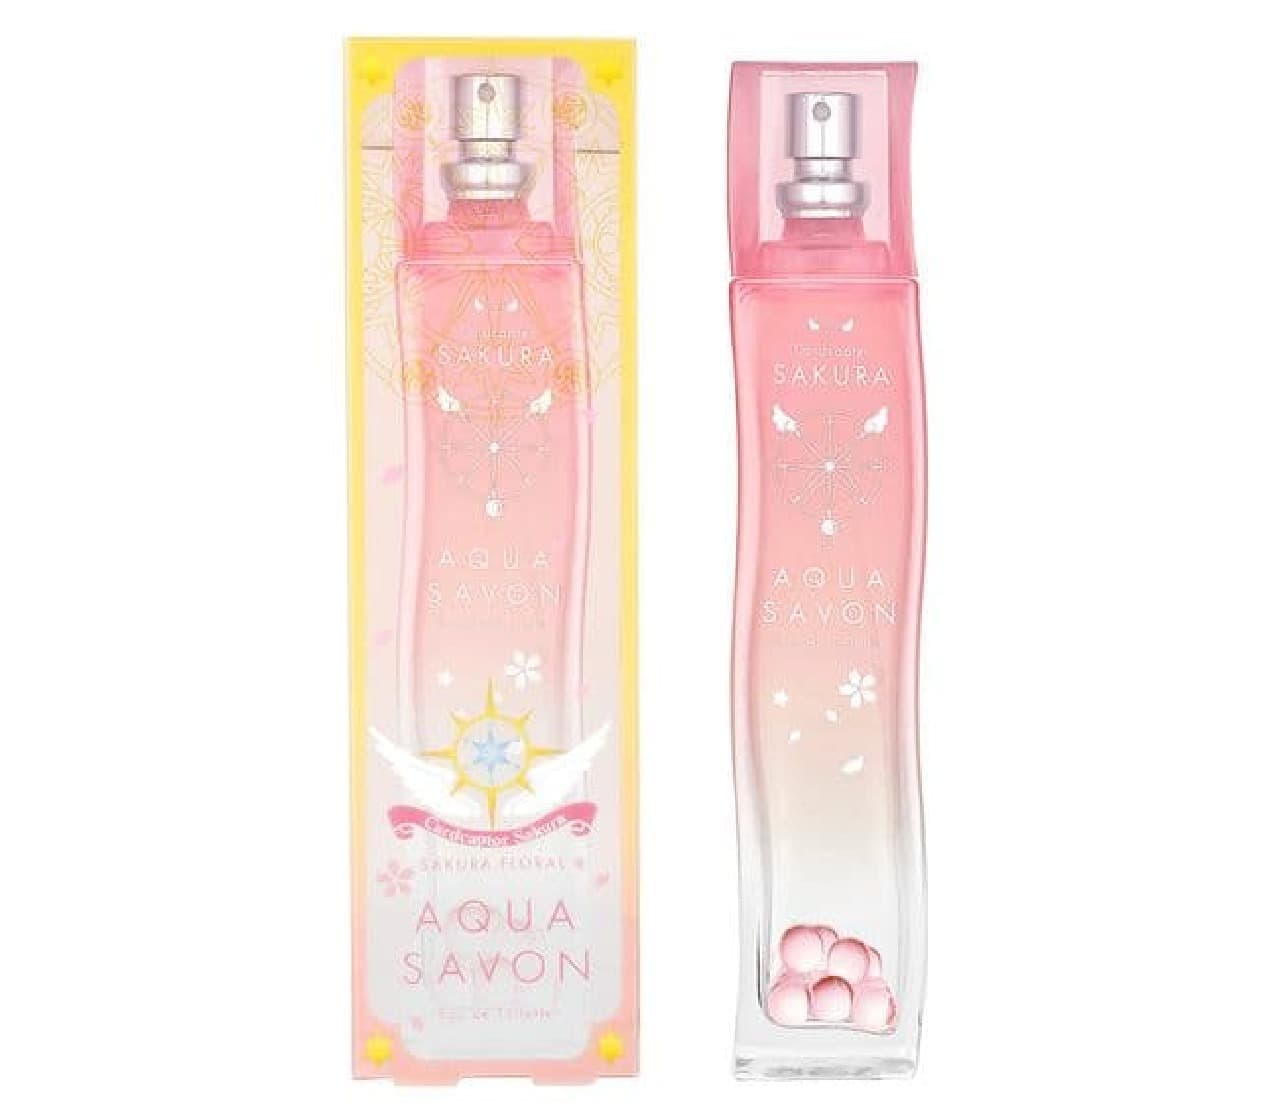 "Aqua Shabon Sakura Floral Fragrance Eau de Toilette" Limited Design 3rd